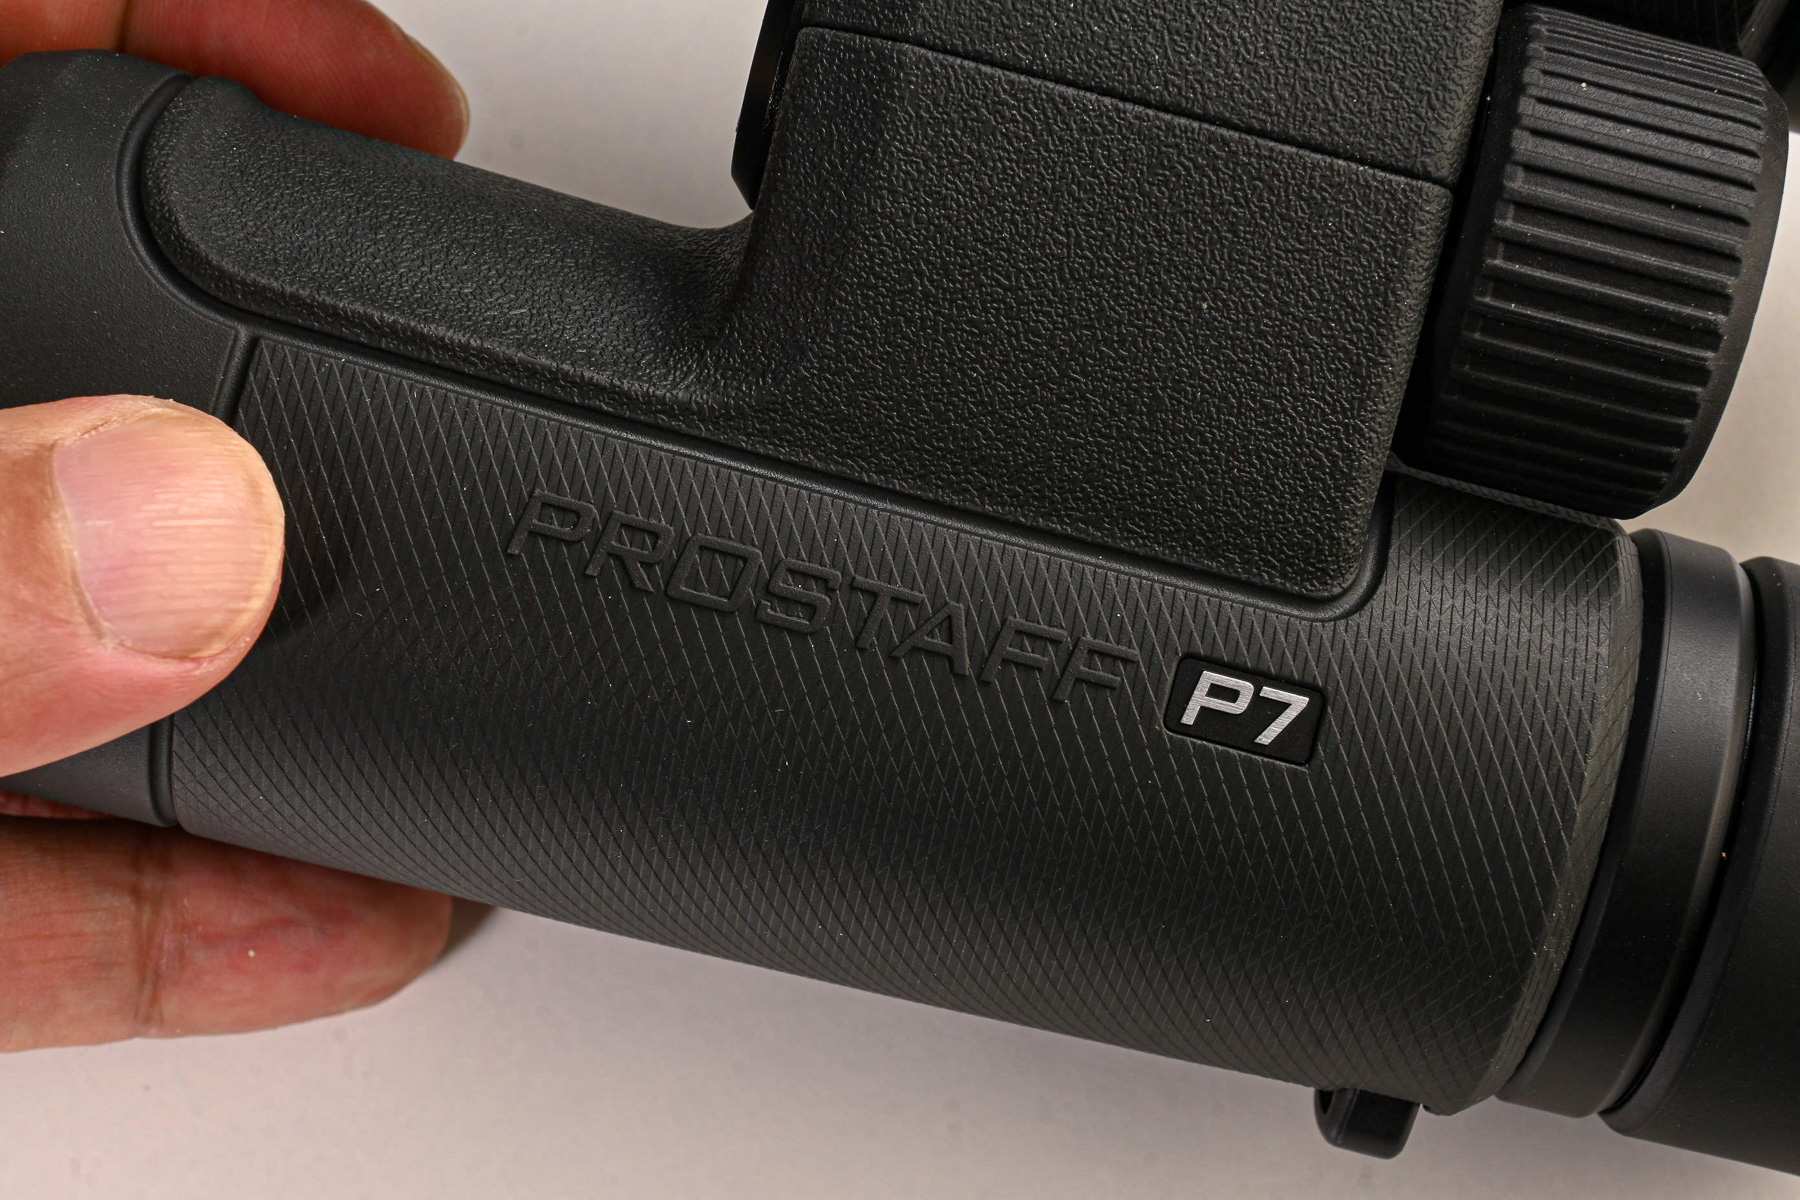 More information about "Nikon Prostaff P7 8x42 in prova"